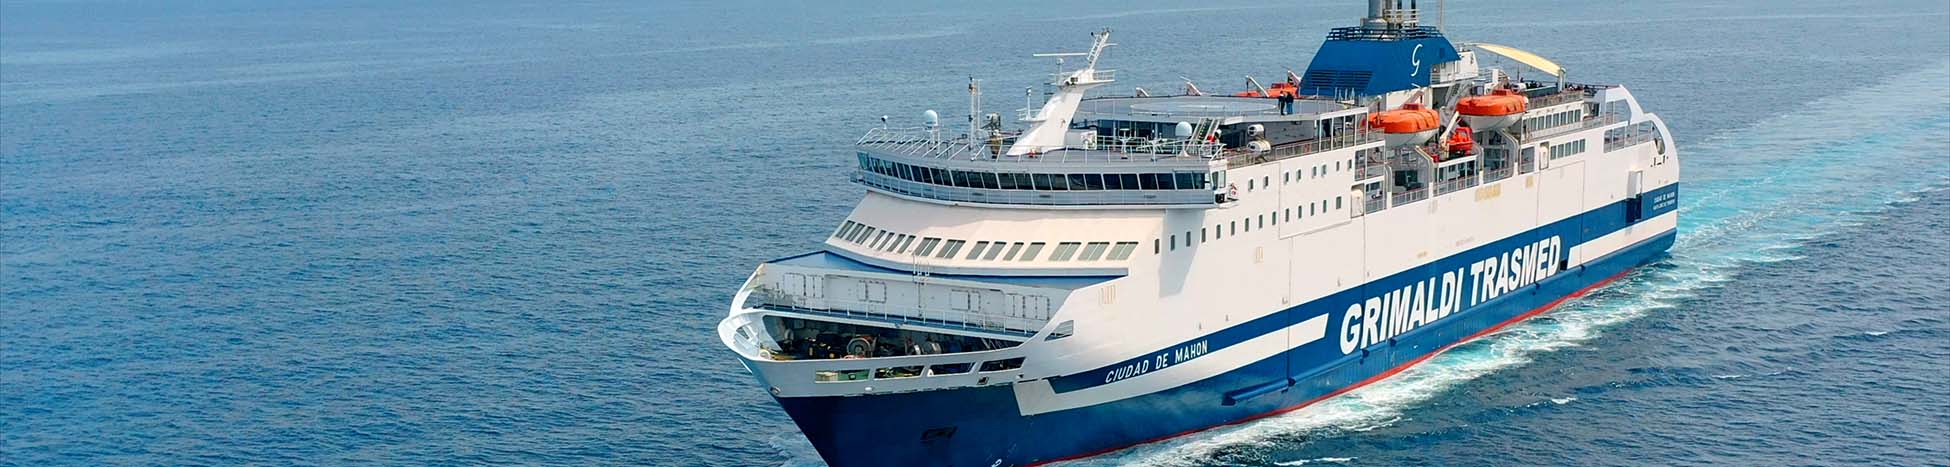 Resource image of the destination port Barcelona for the ferry route Menorca (Mahon) - Barcelona